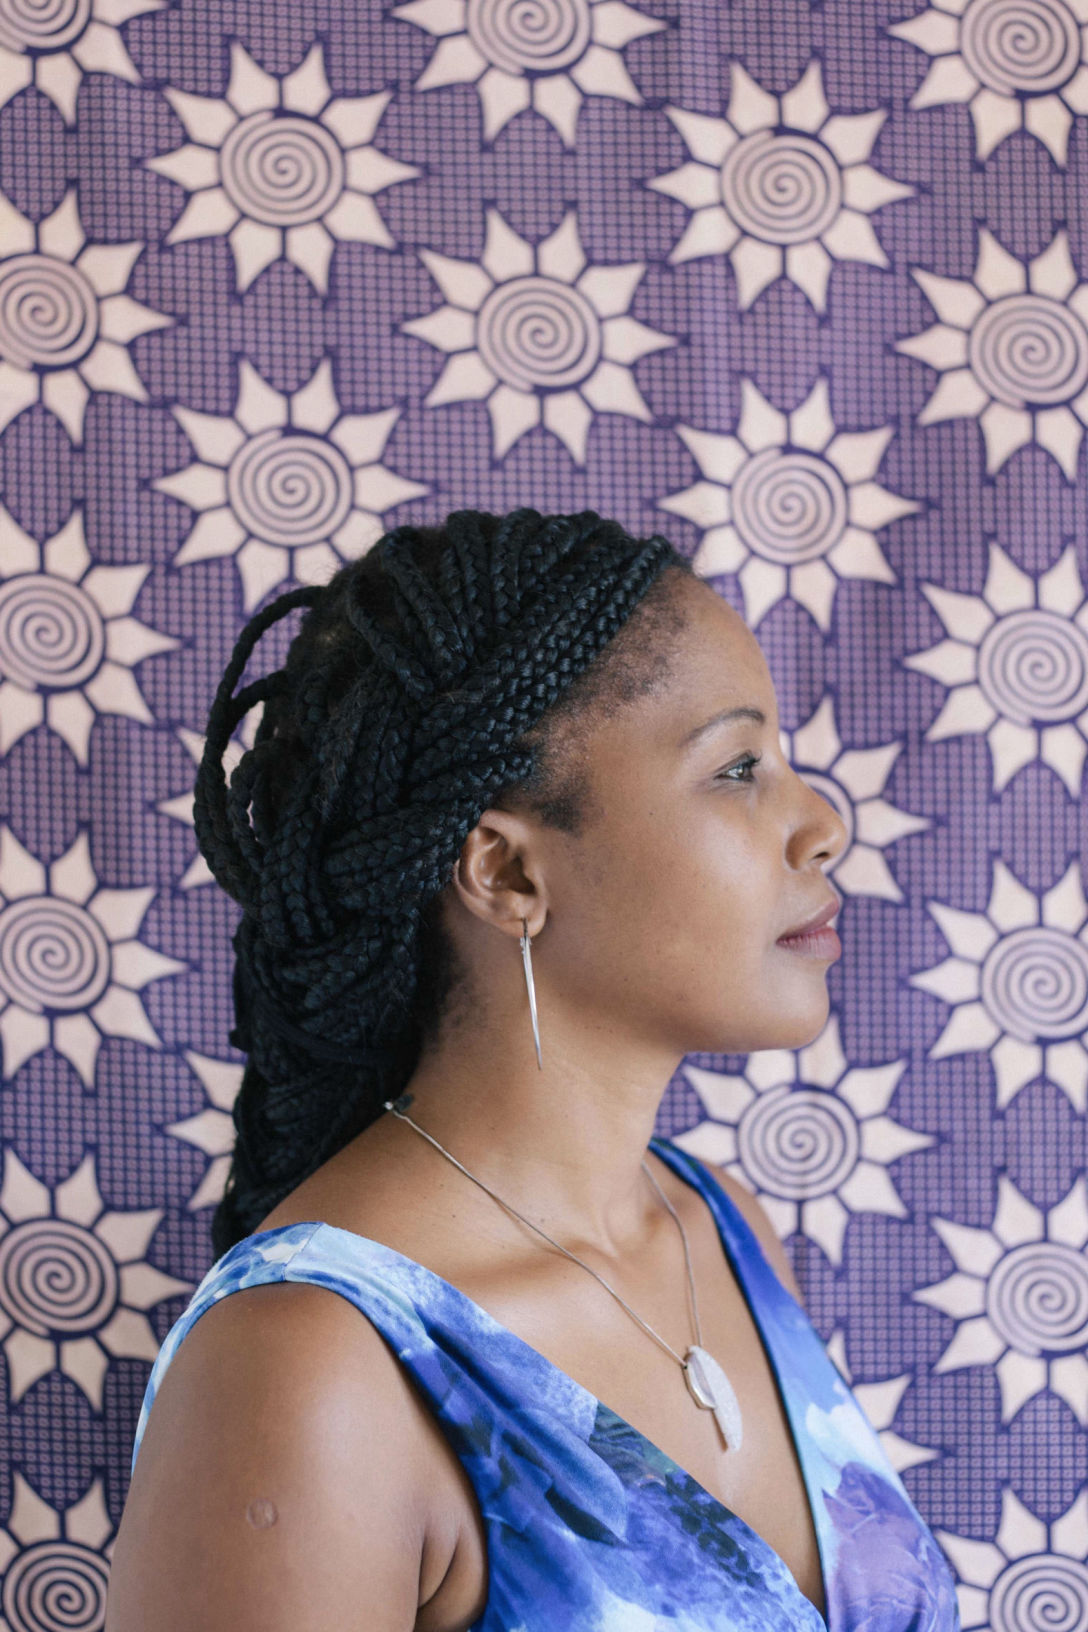 mayamiko portrait with fabric